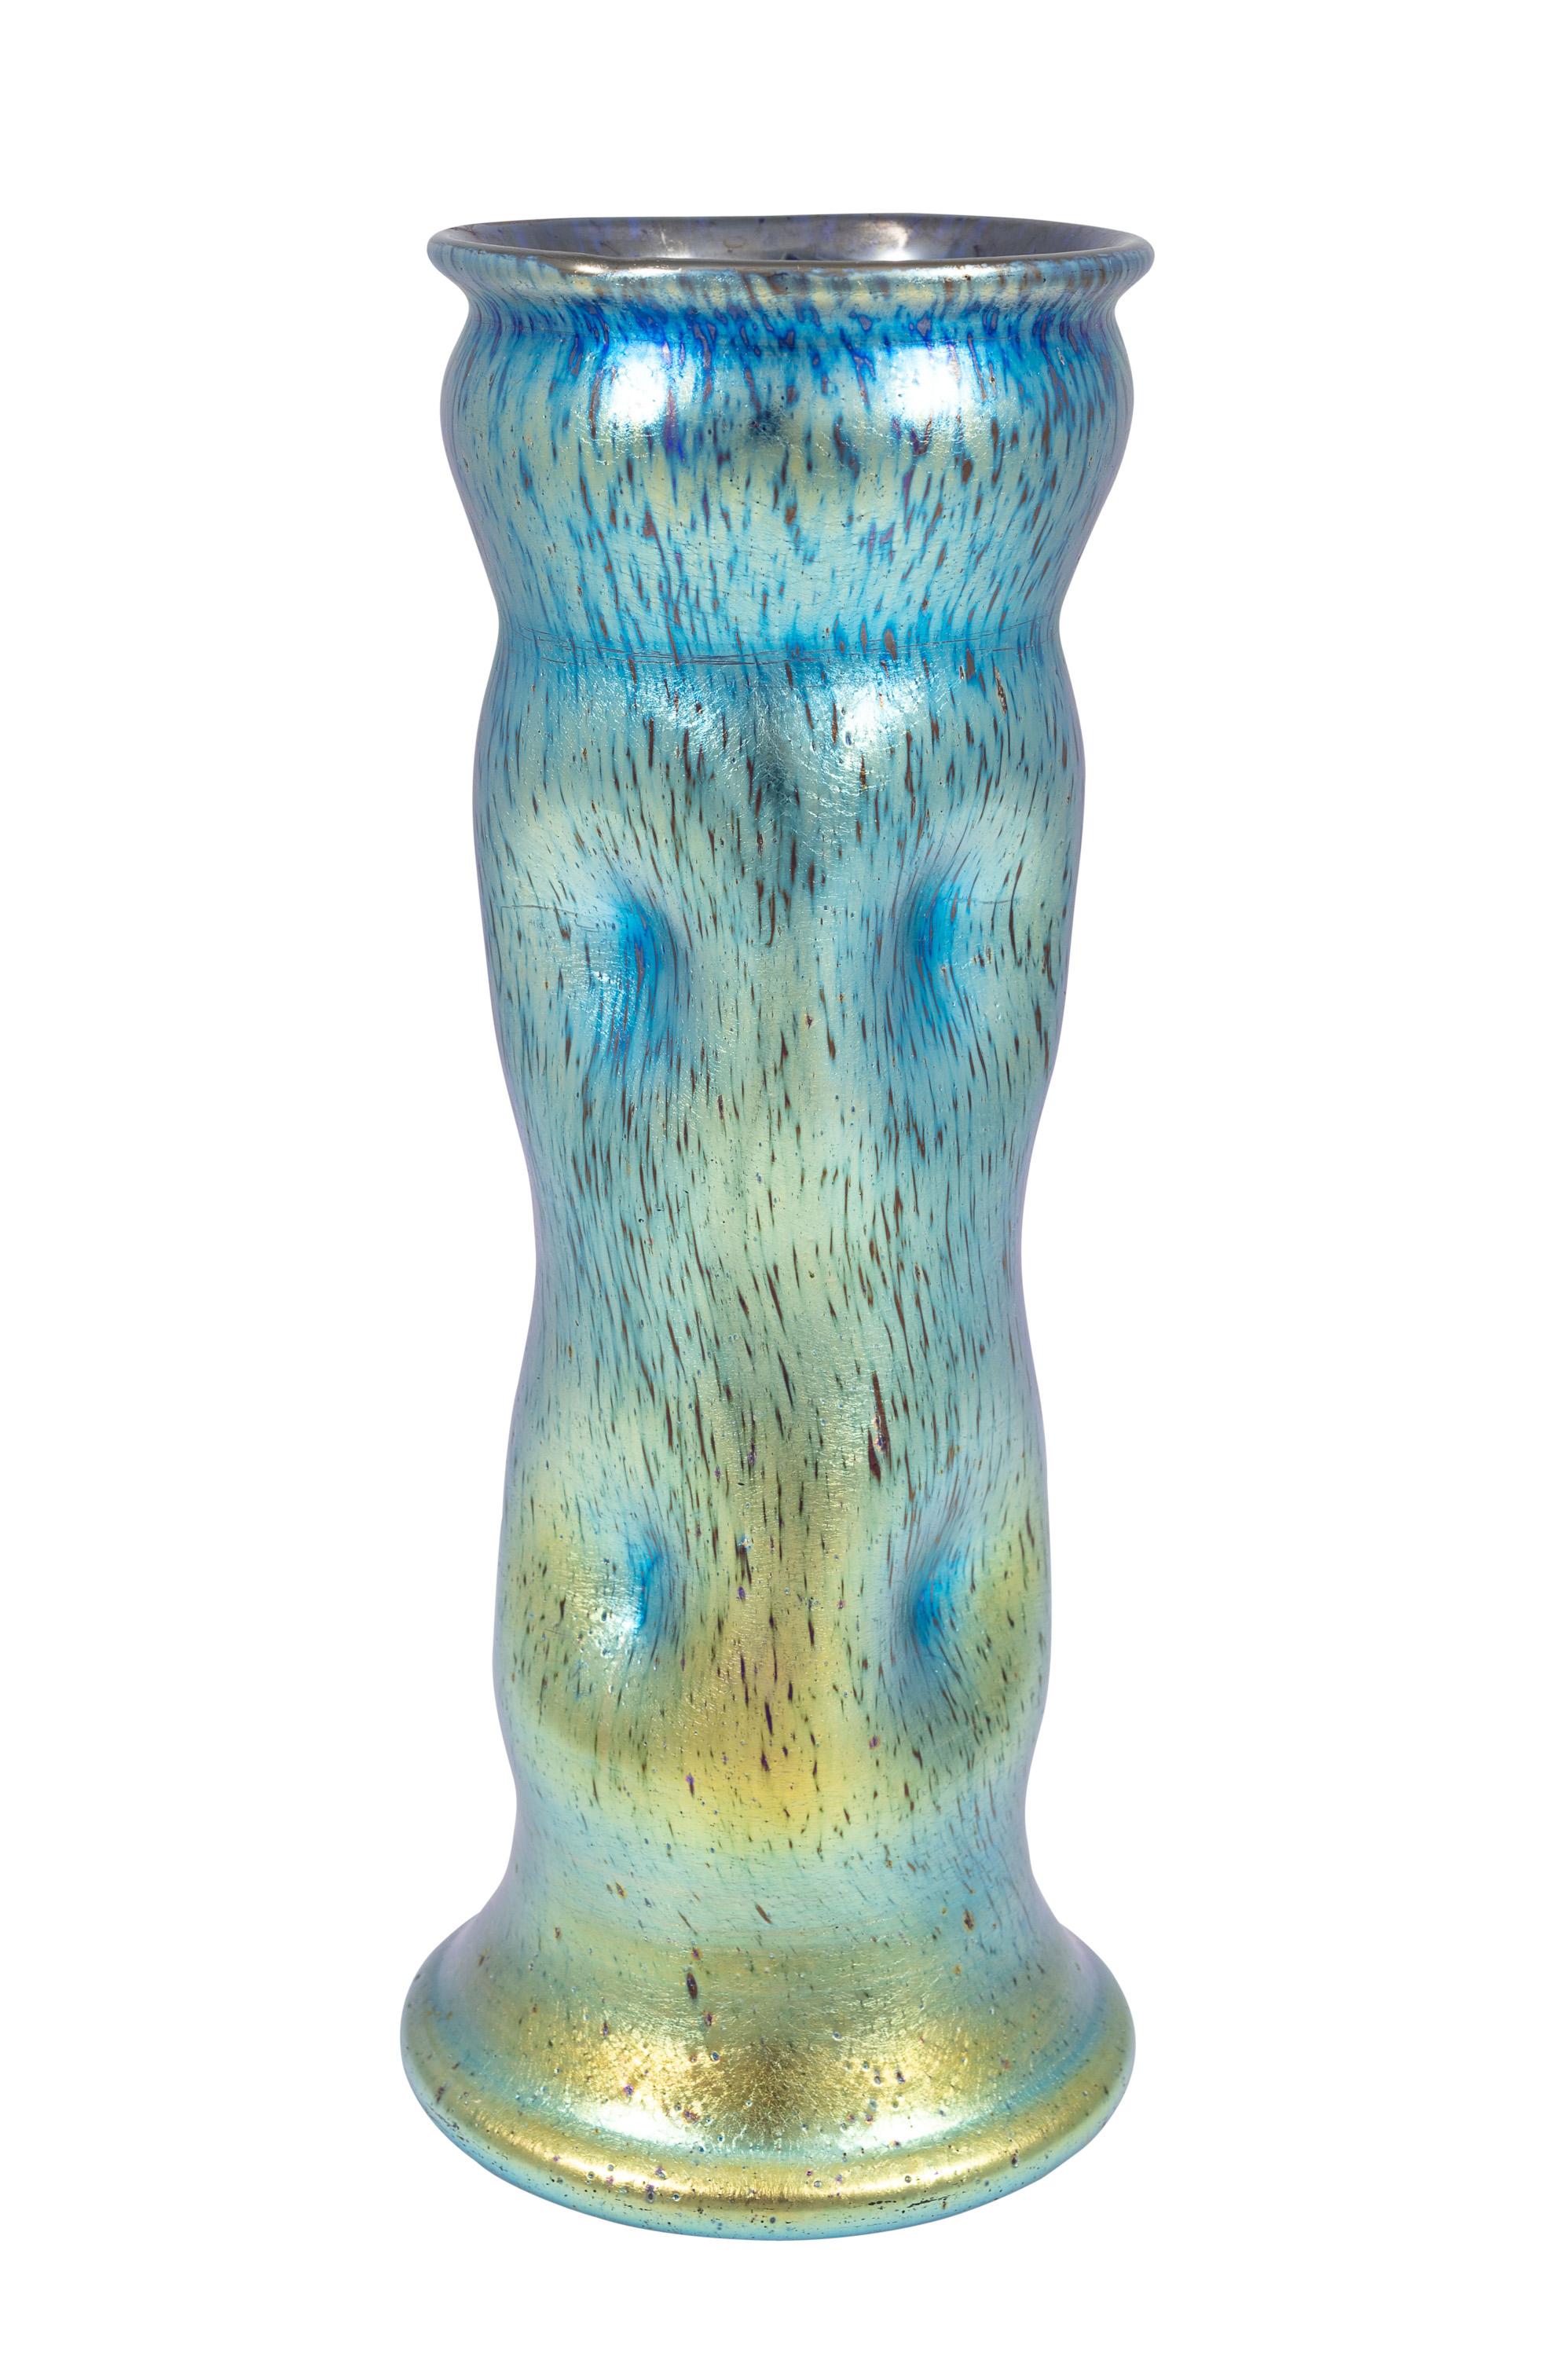 Bohemian glass vase, manufactured by Johann Loetz Witwe, Norma Cobalt decoration, ca. 1900, Paris World Exhibition, Blue, Silver, Yellow, Viennese Art Nouveau, Jugendstil, Art Deco, art glass, iridescent glass.

Technique and material: Glass,